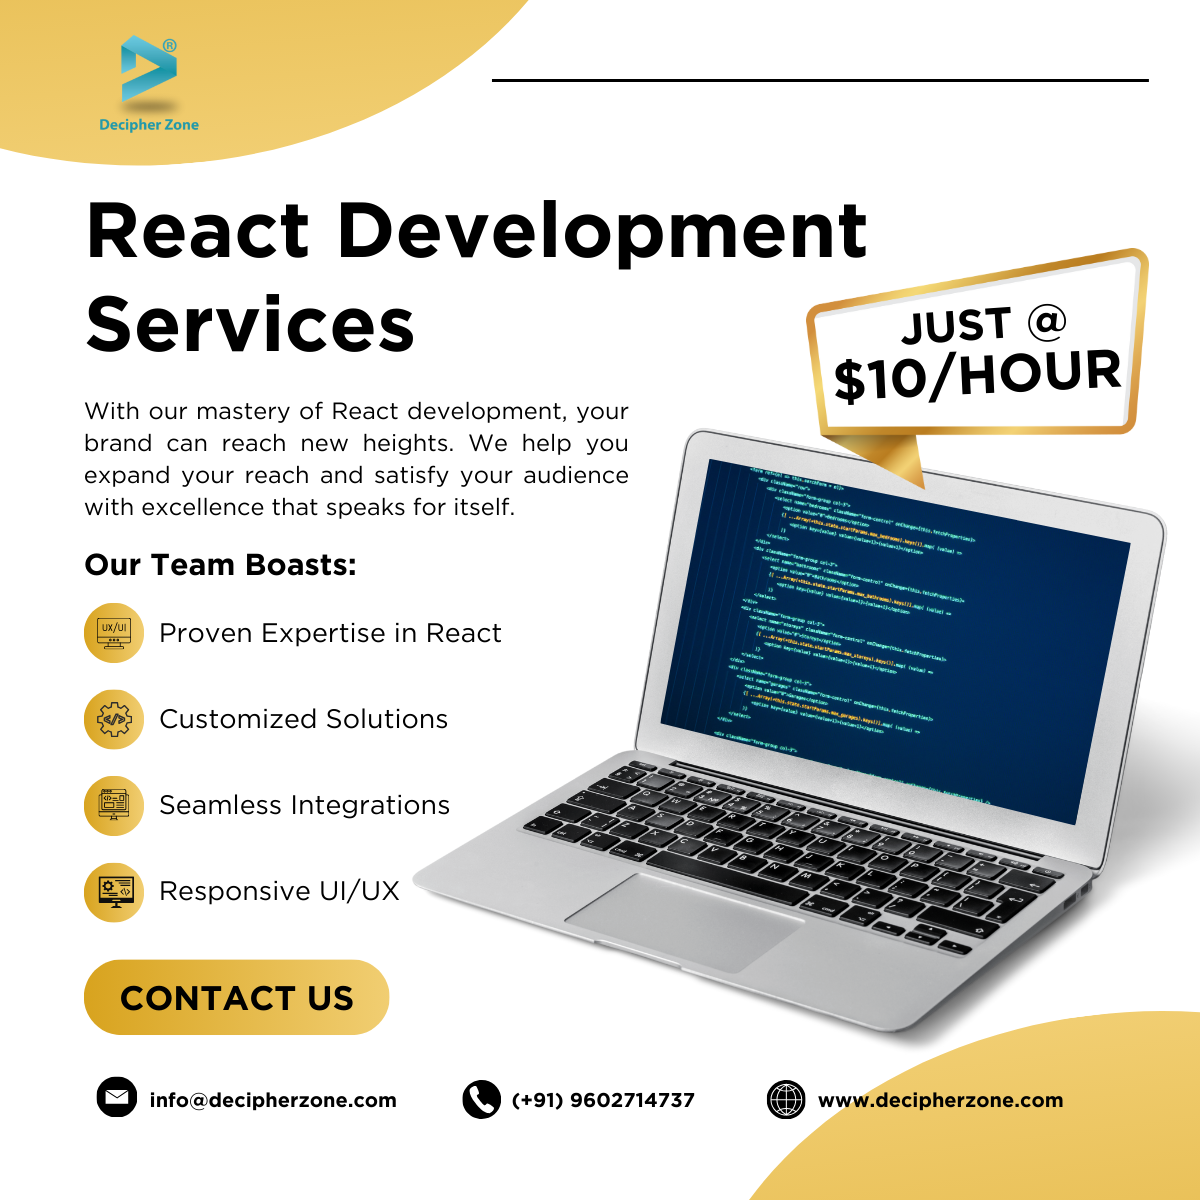 Web Application Development Services